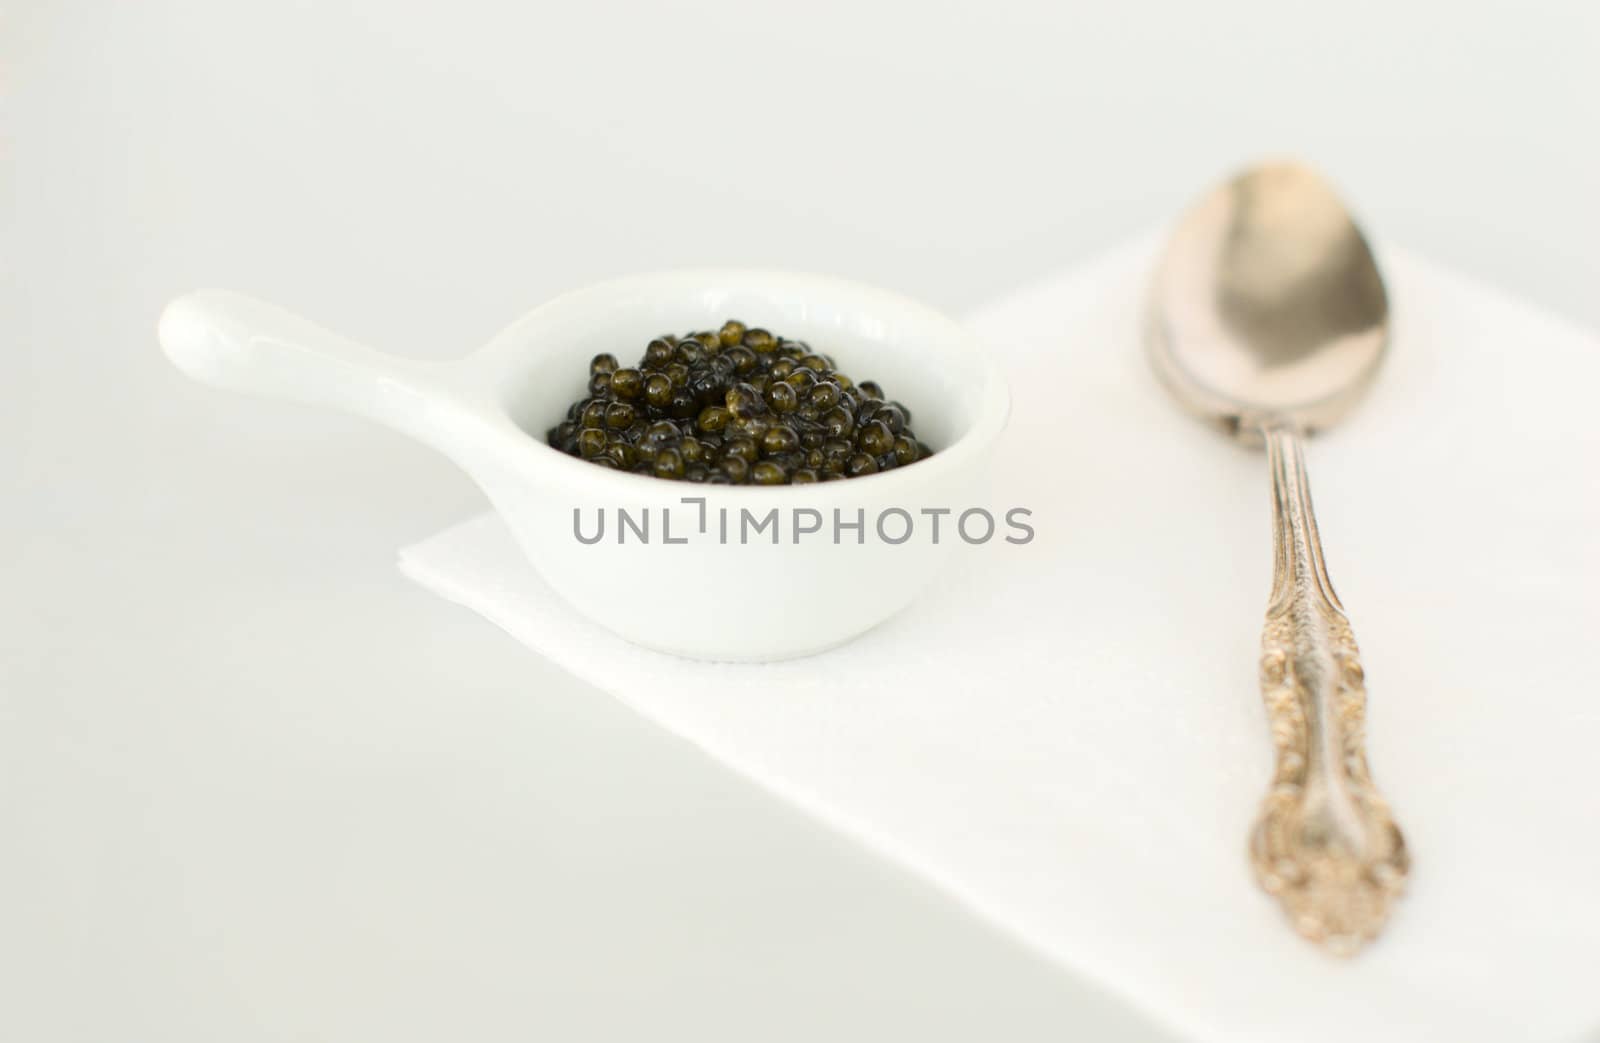 Bon appetit - caviar and silver spoon